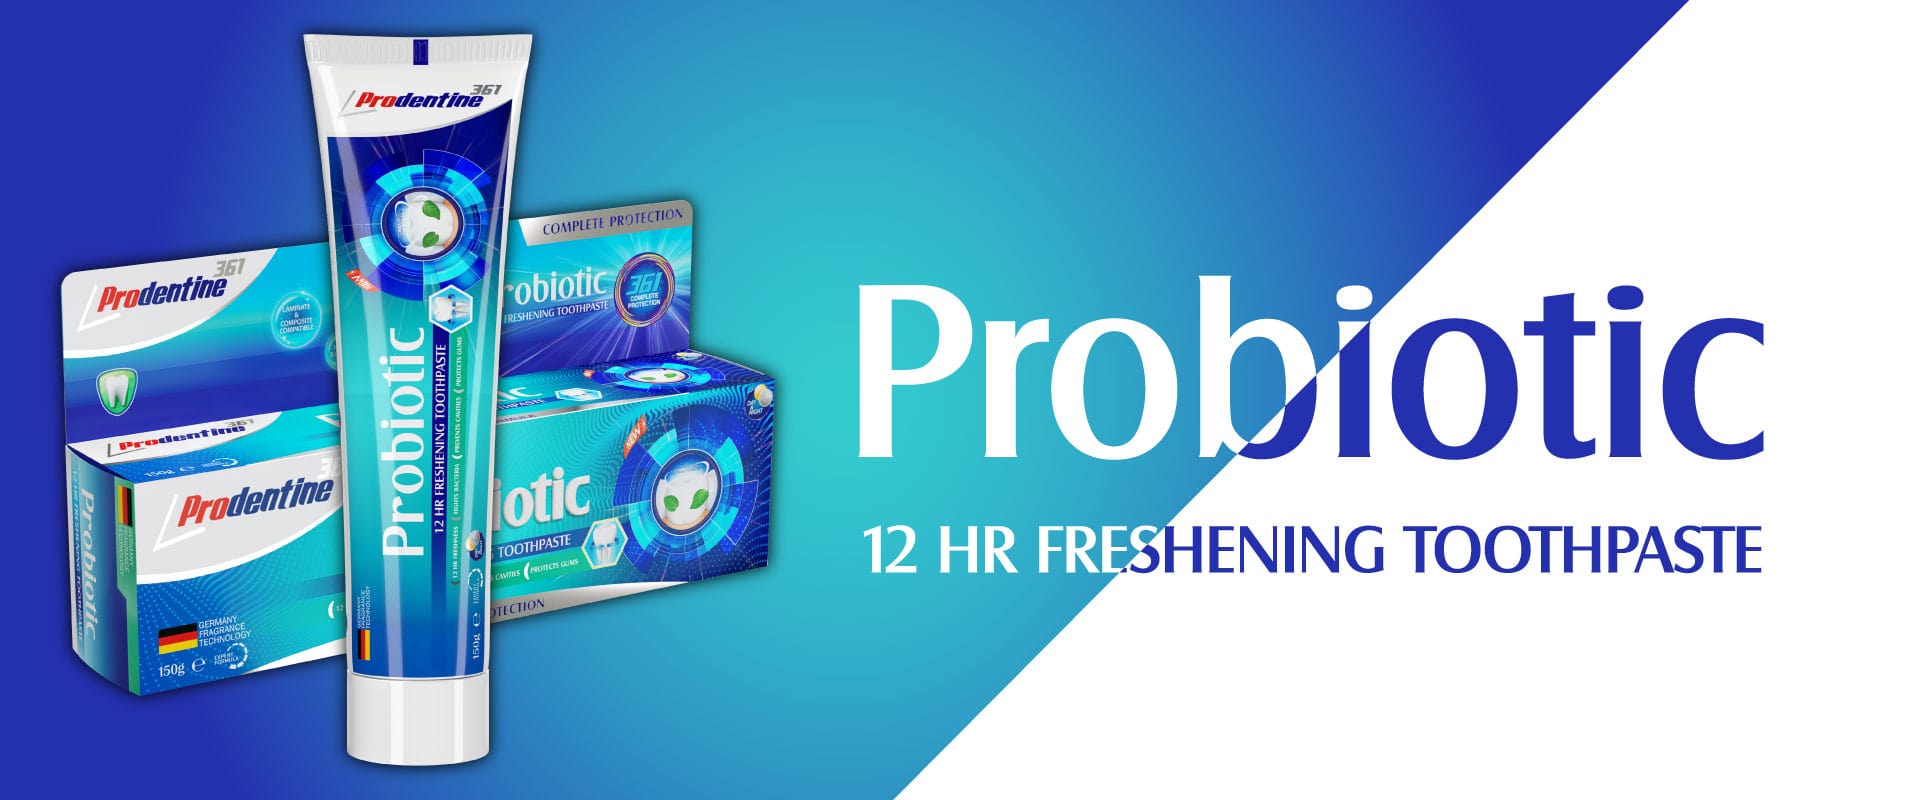 Probiotic-prodentine-min